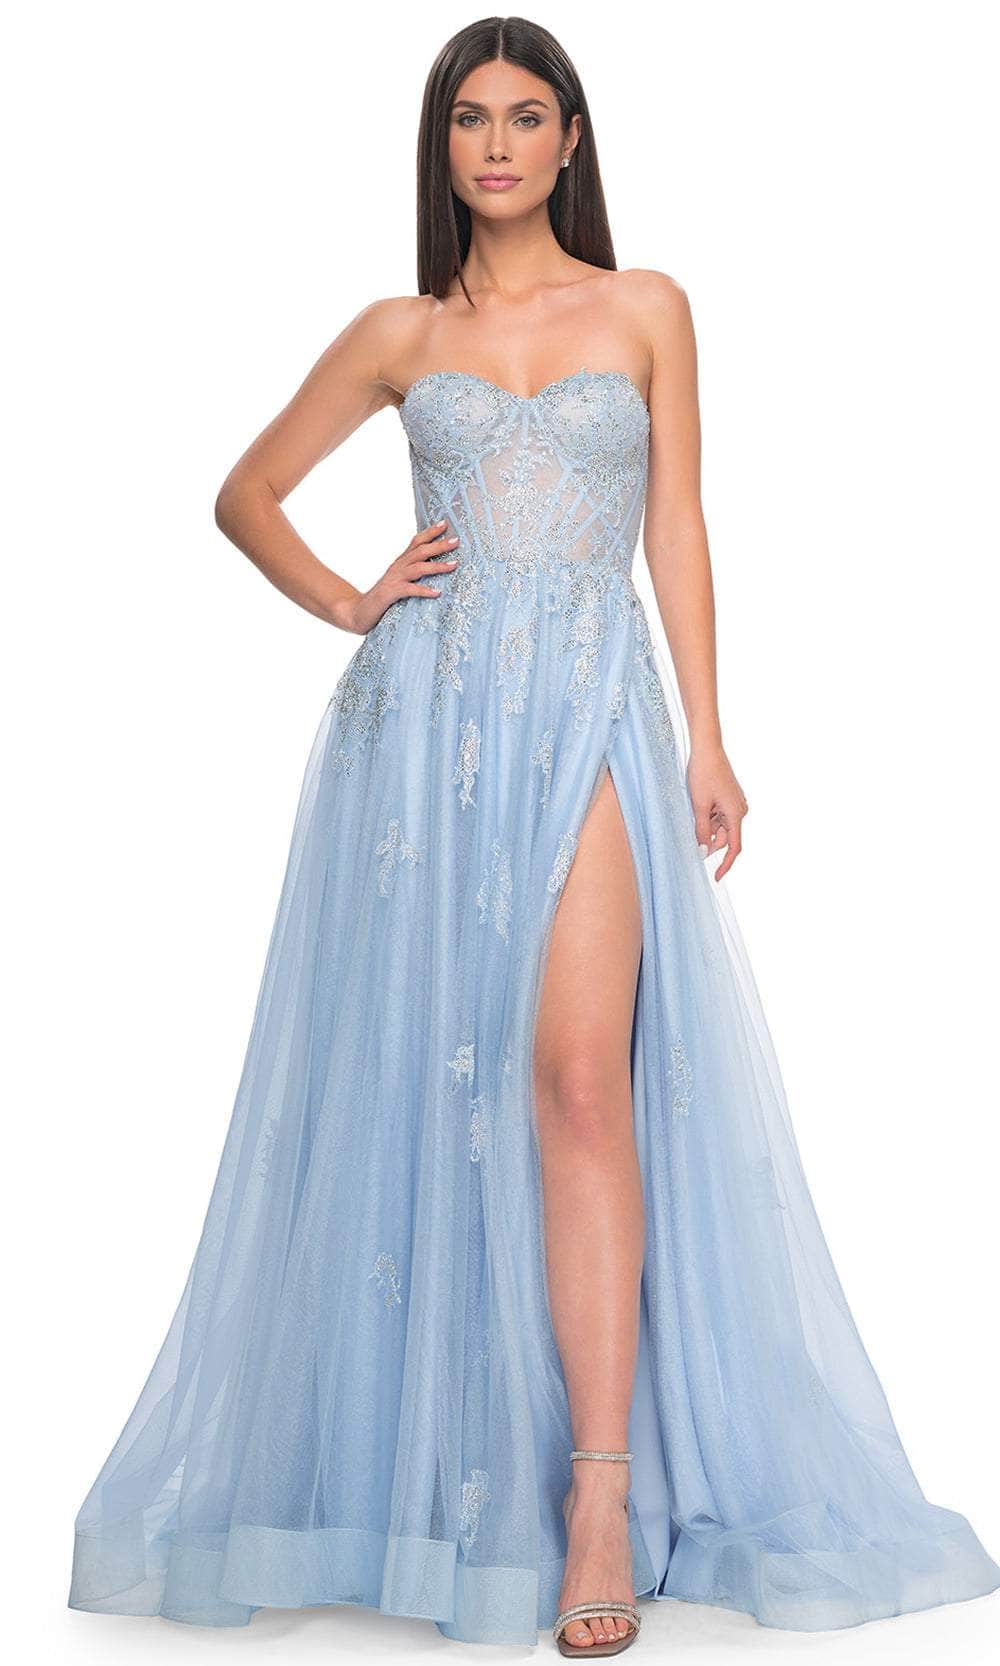 La Femme 32111 - Strapless Tulle Prom Dress Prom Dresses 00 / Cloud Blue